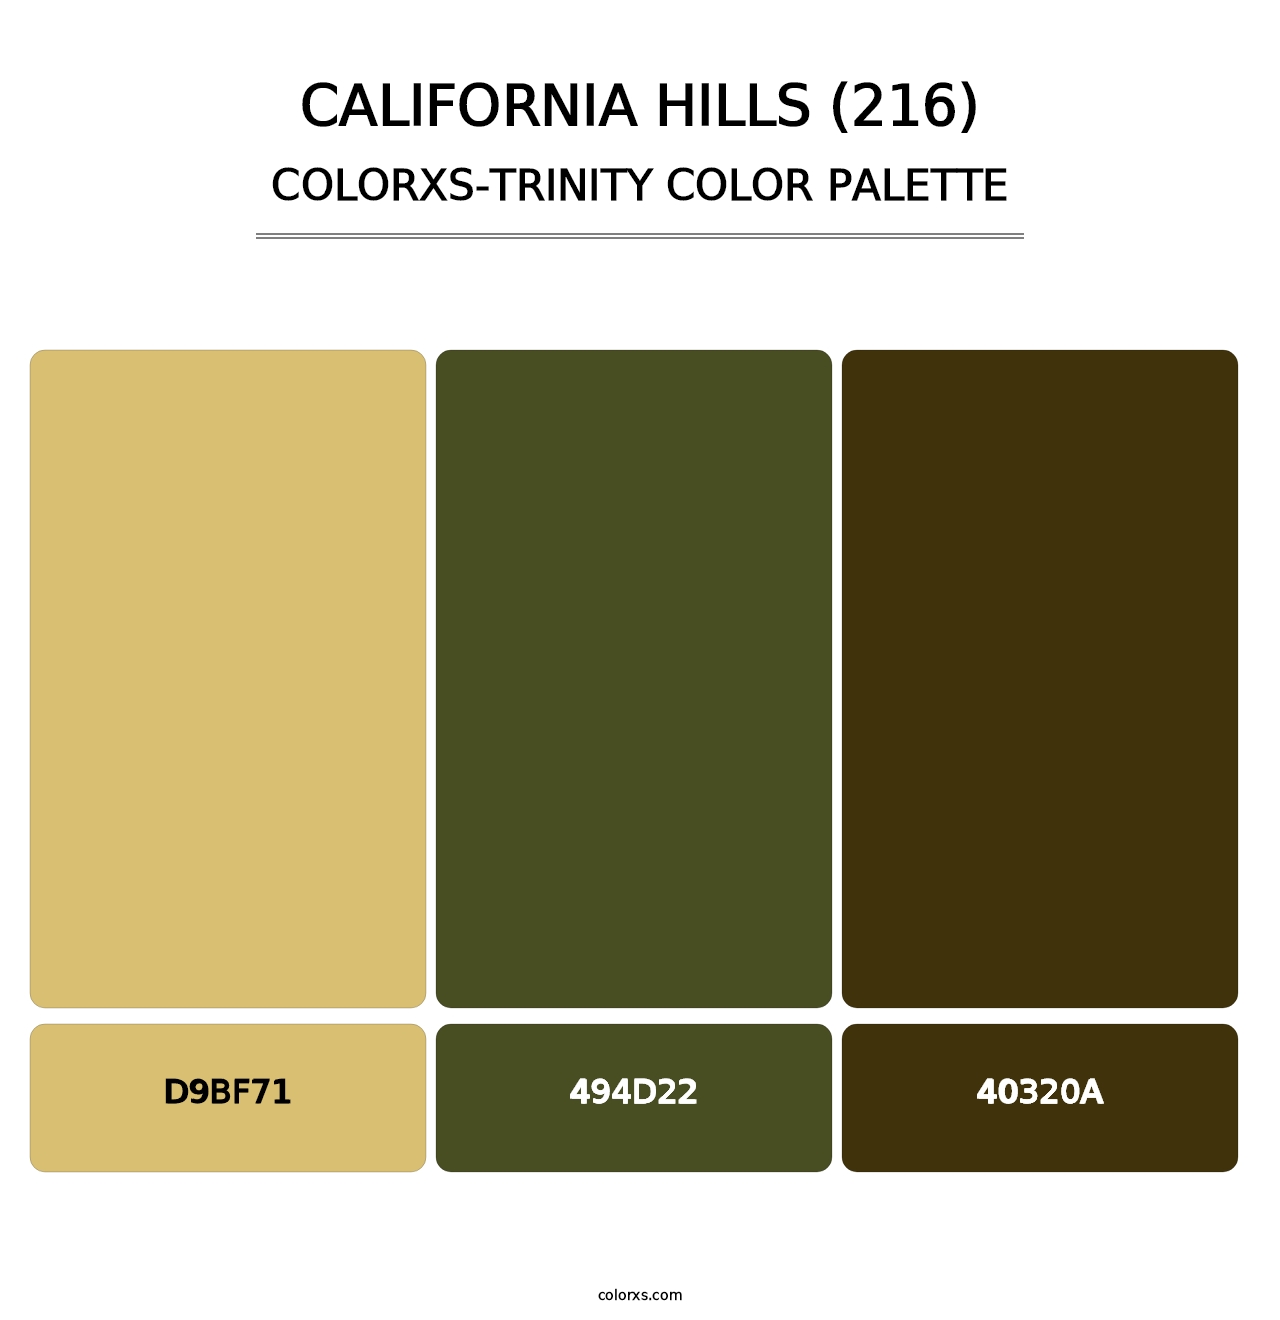 California Hills (216) - Colorxs Trinity Palette